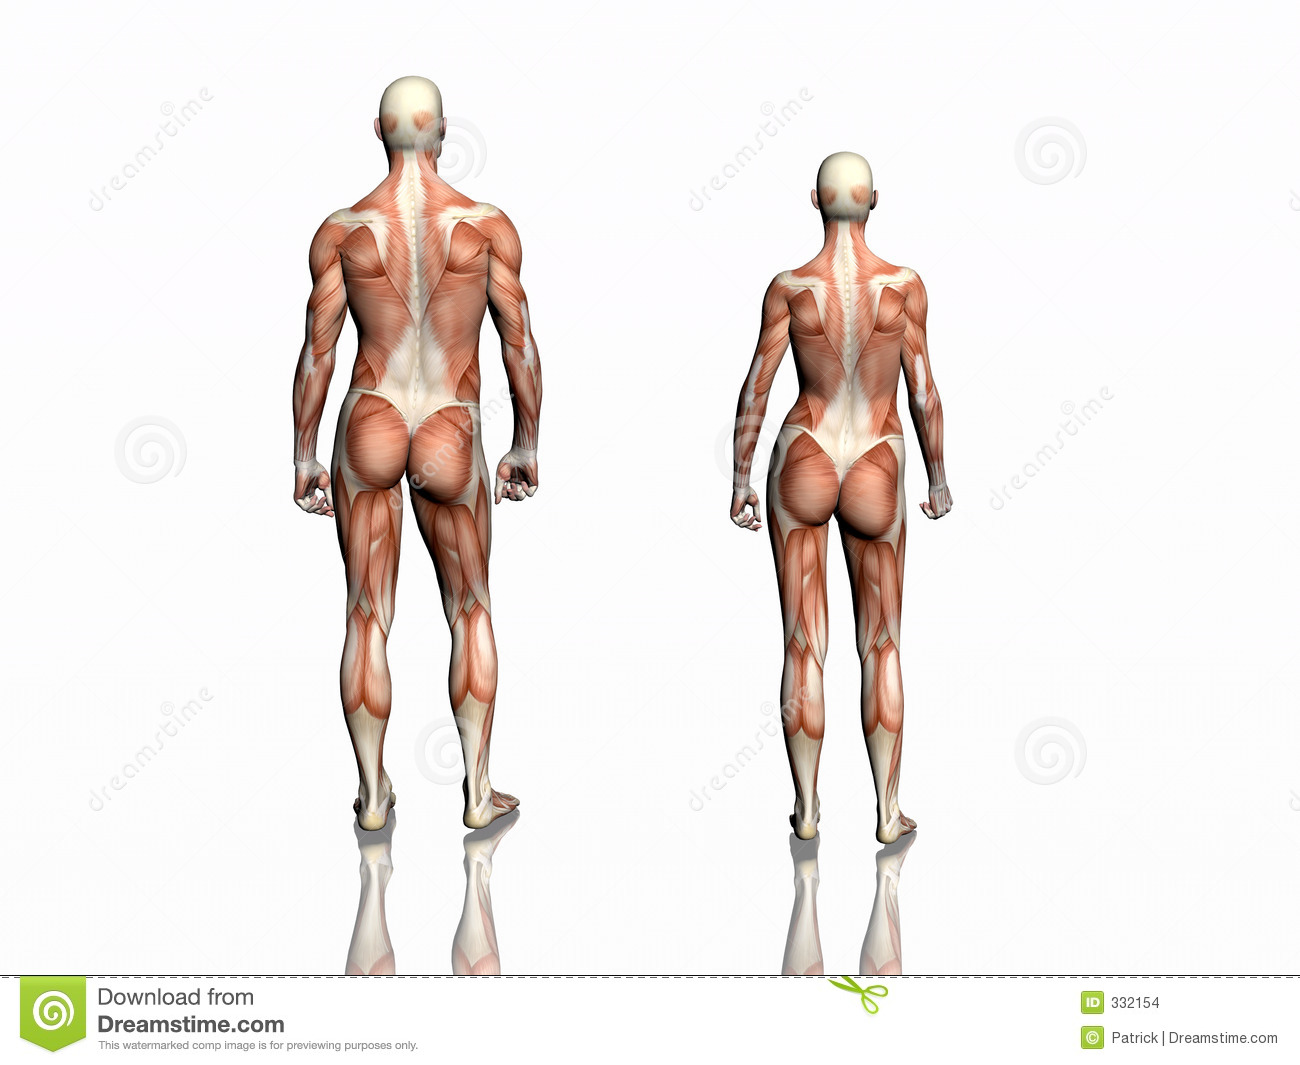 anatomy-man-woman-332154.jpg